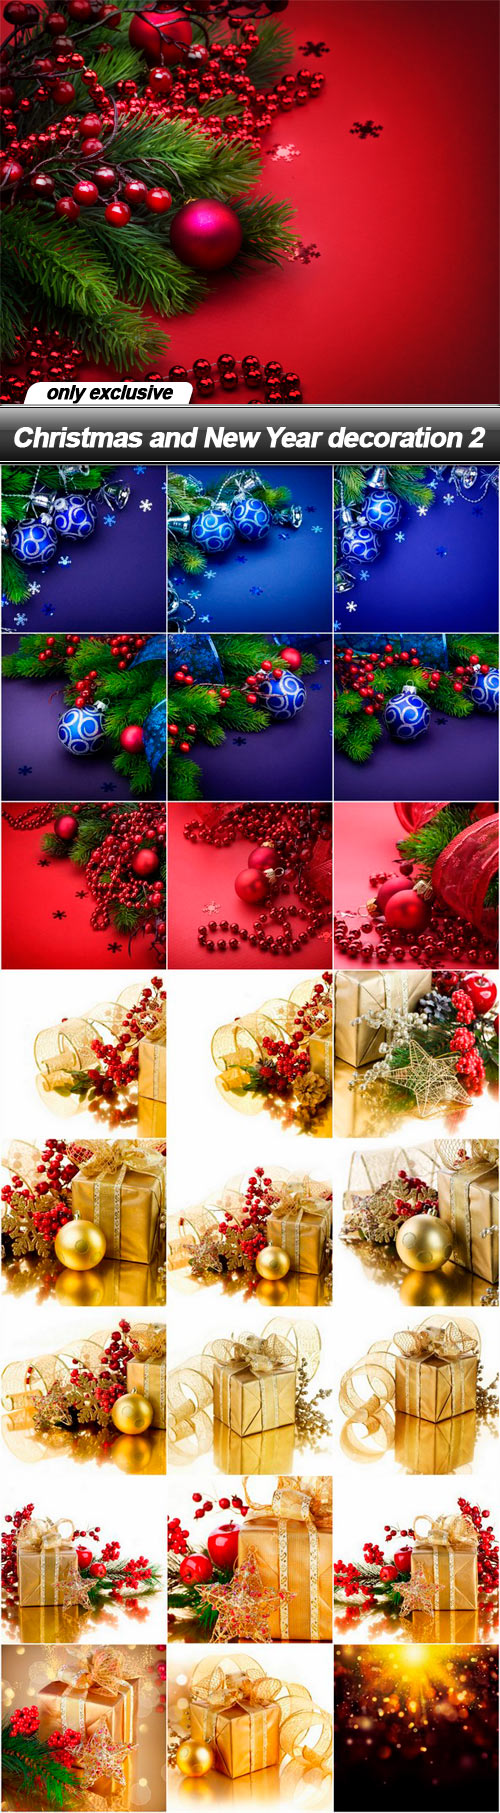 Christmas and New Year decoration 2 - 25 UHQ JPEG